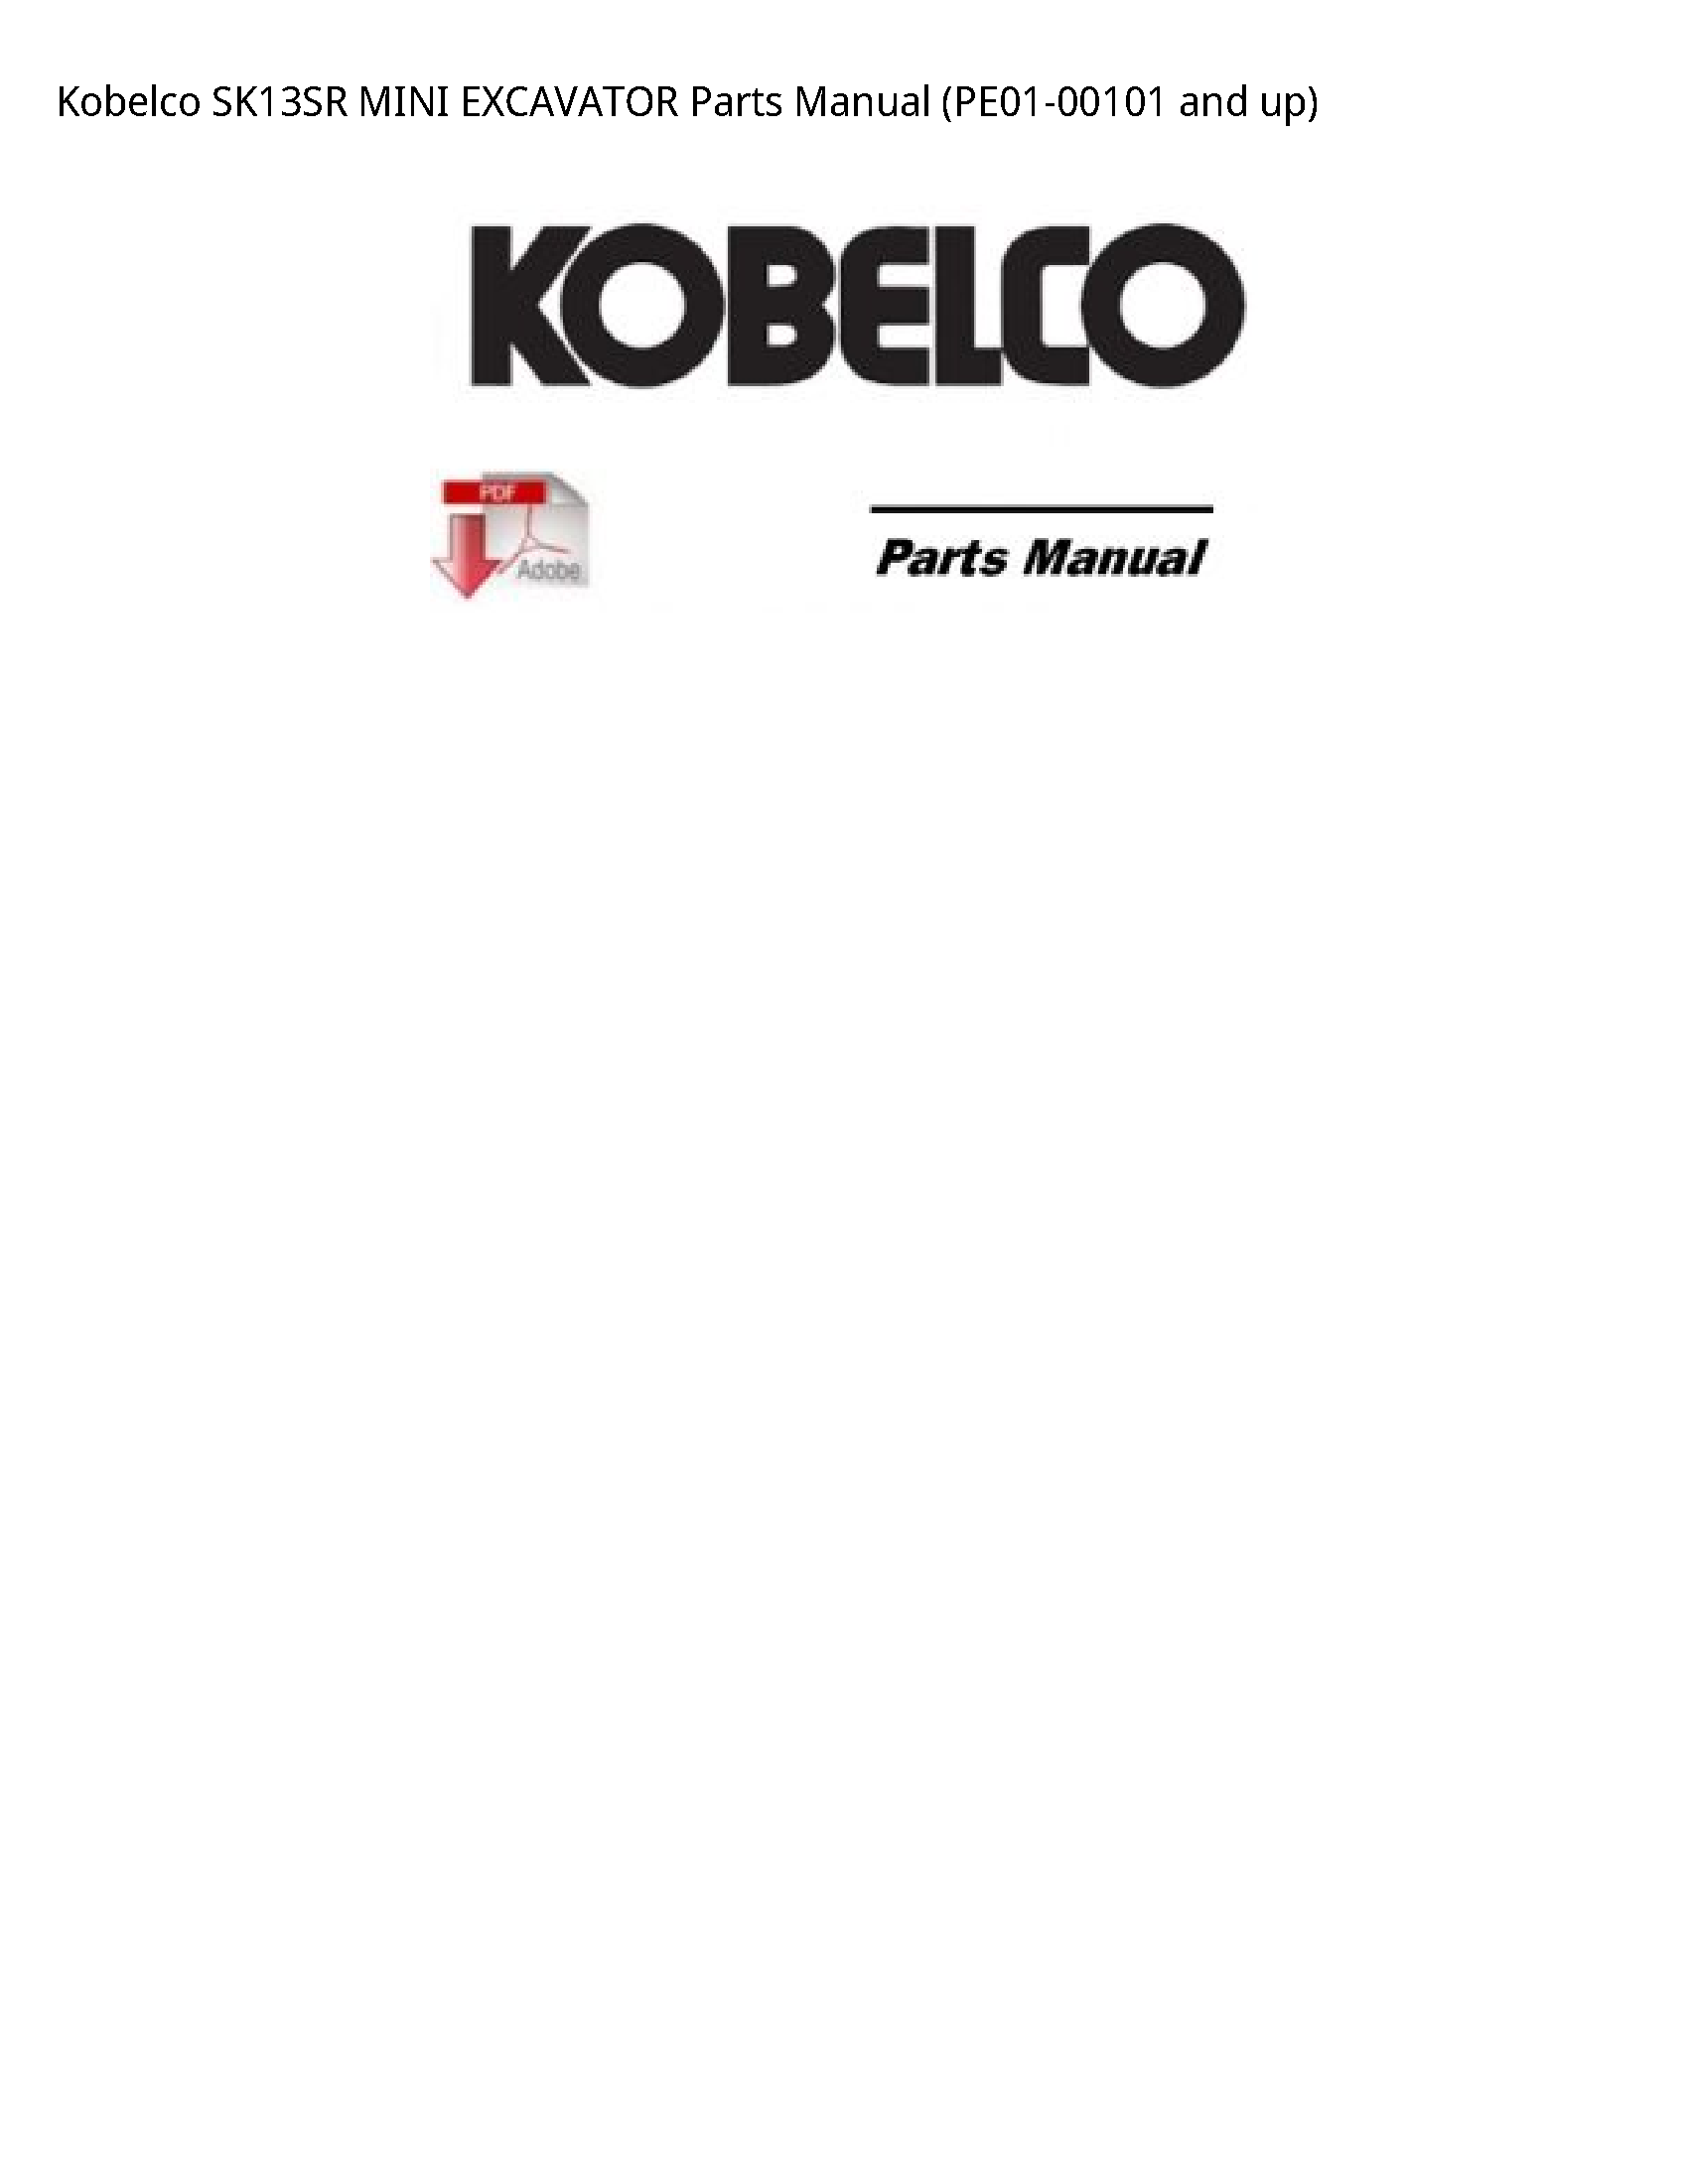 Kobelco SK13SR MINI EXCAVATOR Parts manual